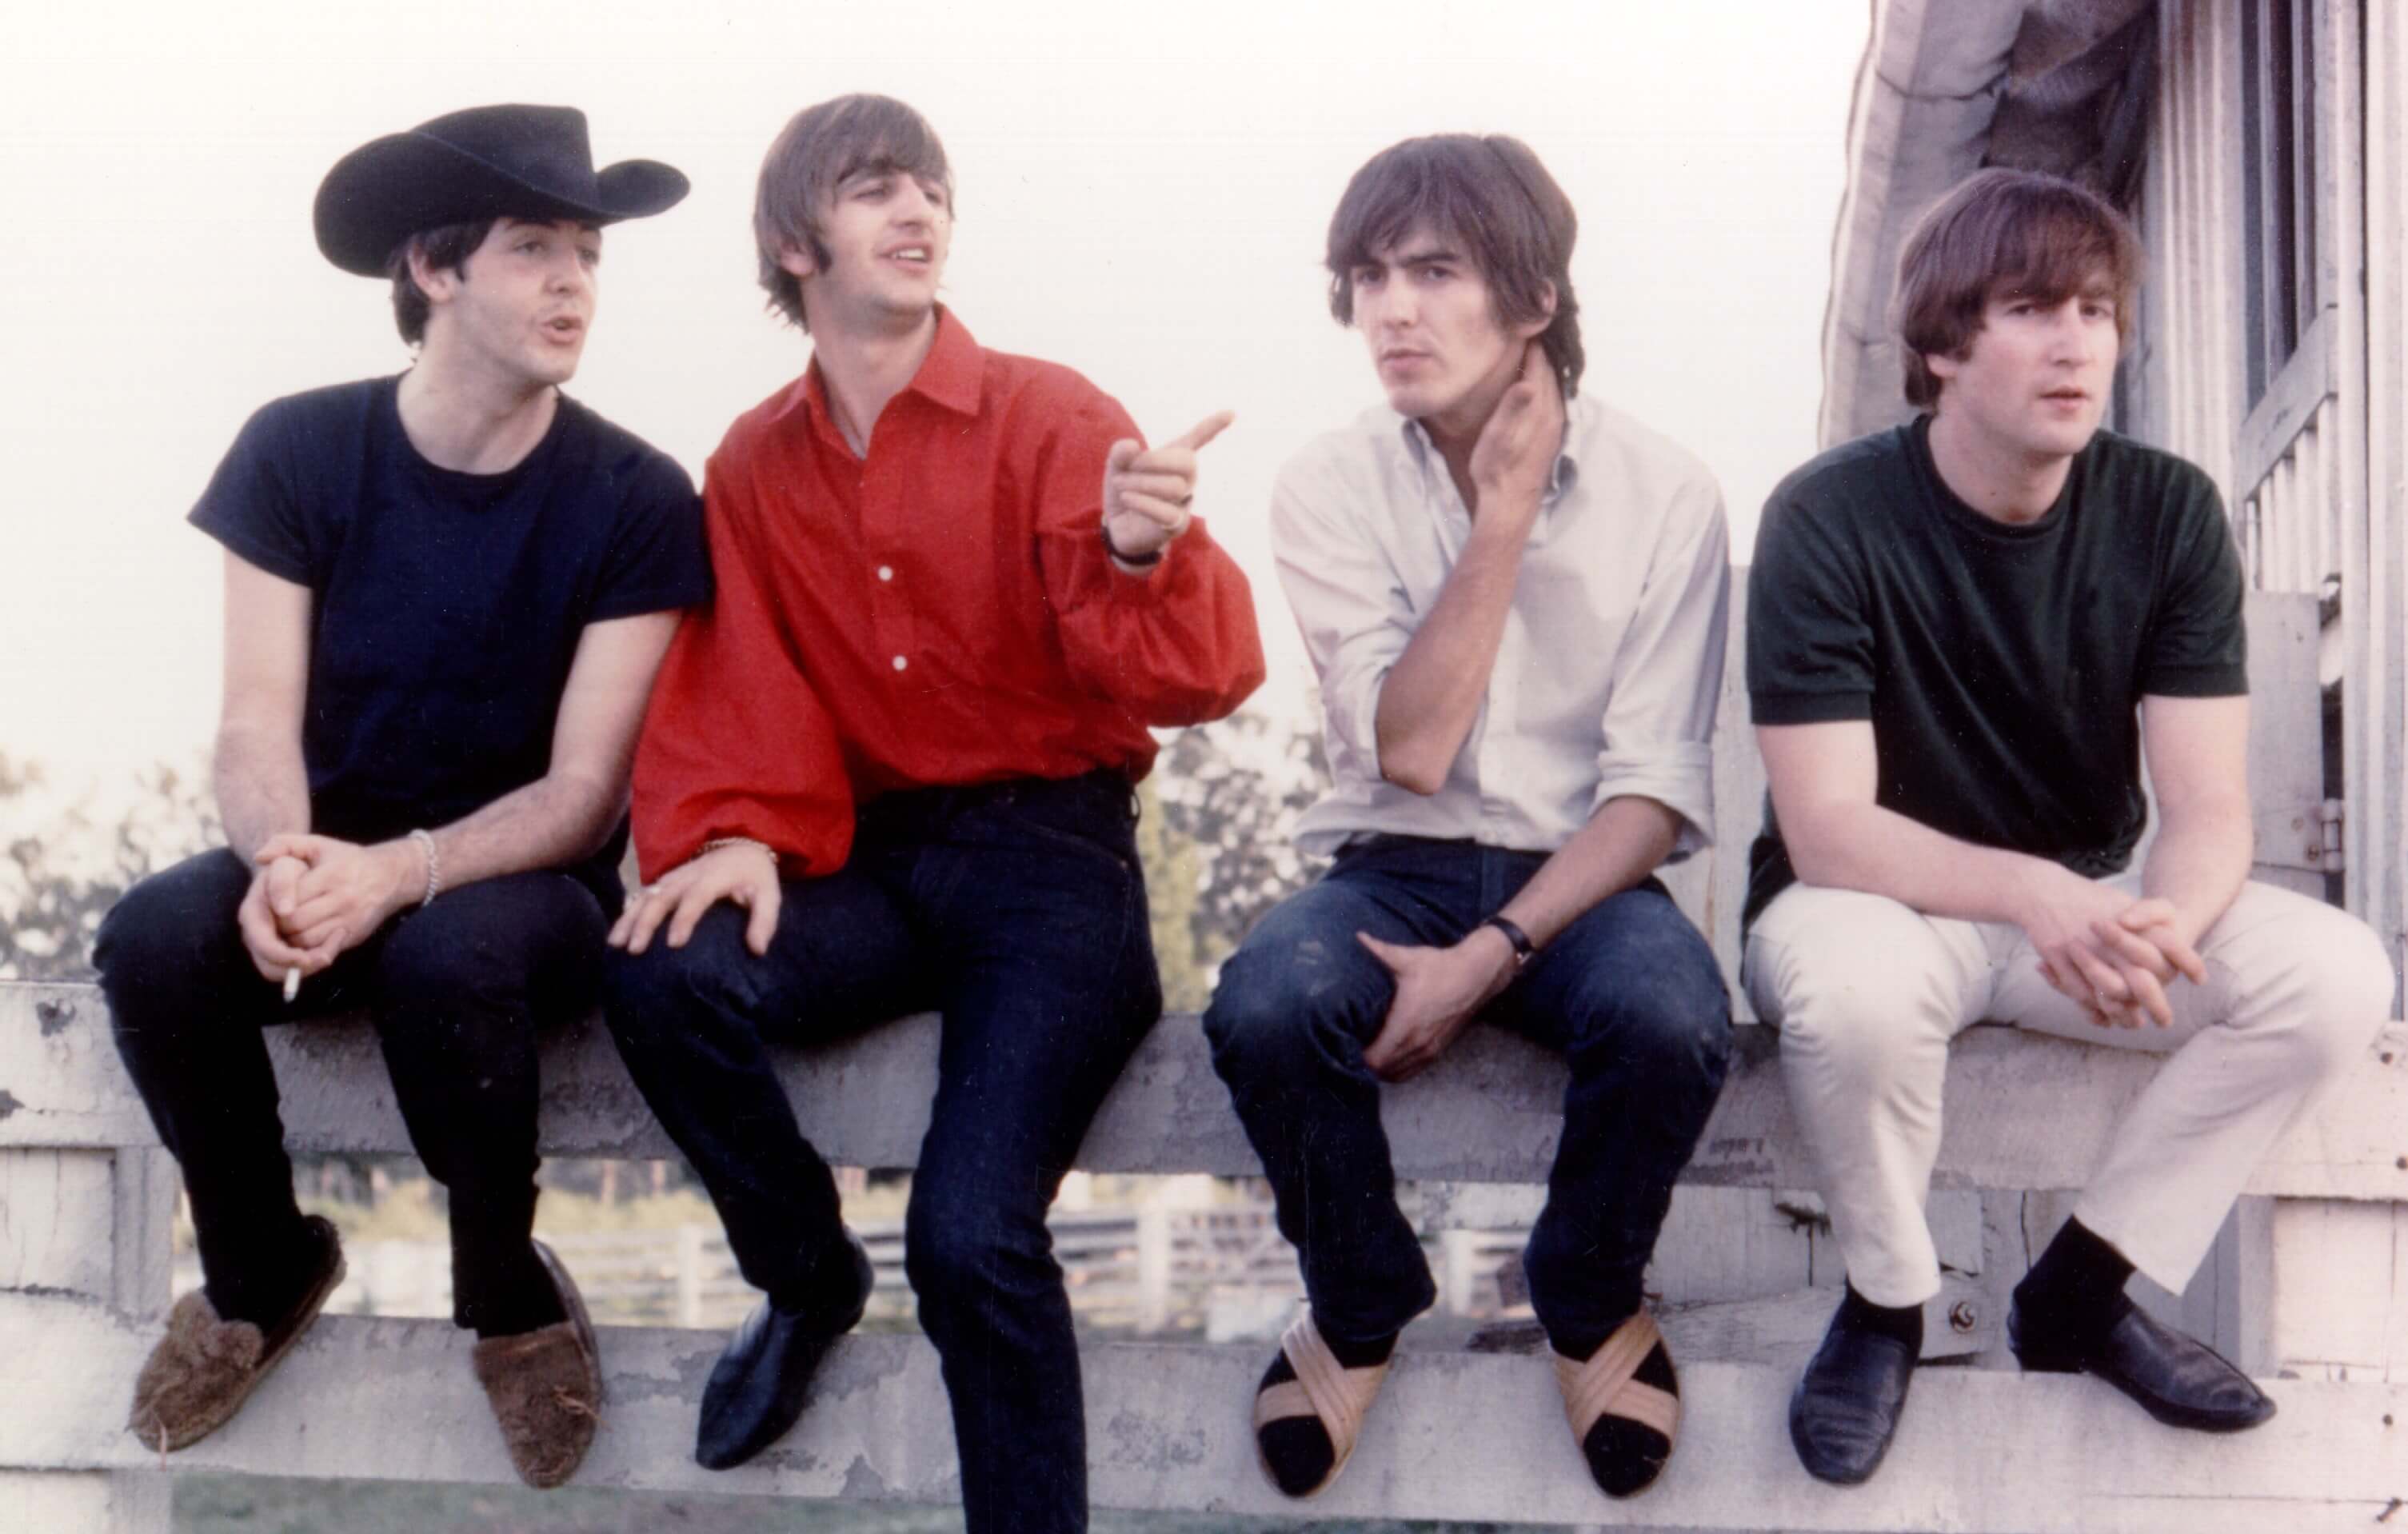 Paul McCartney, Ringo Starr, George Harrison, and John Lennon sitting on a fence during The Beatles' "Help!" era